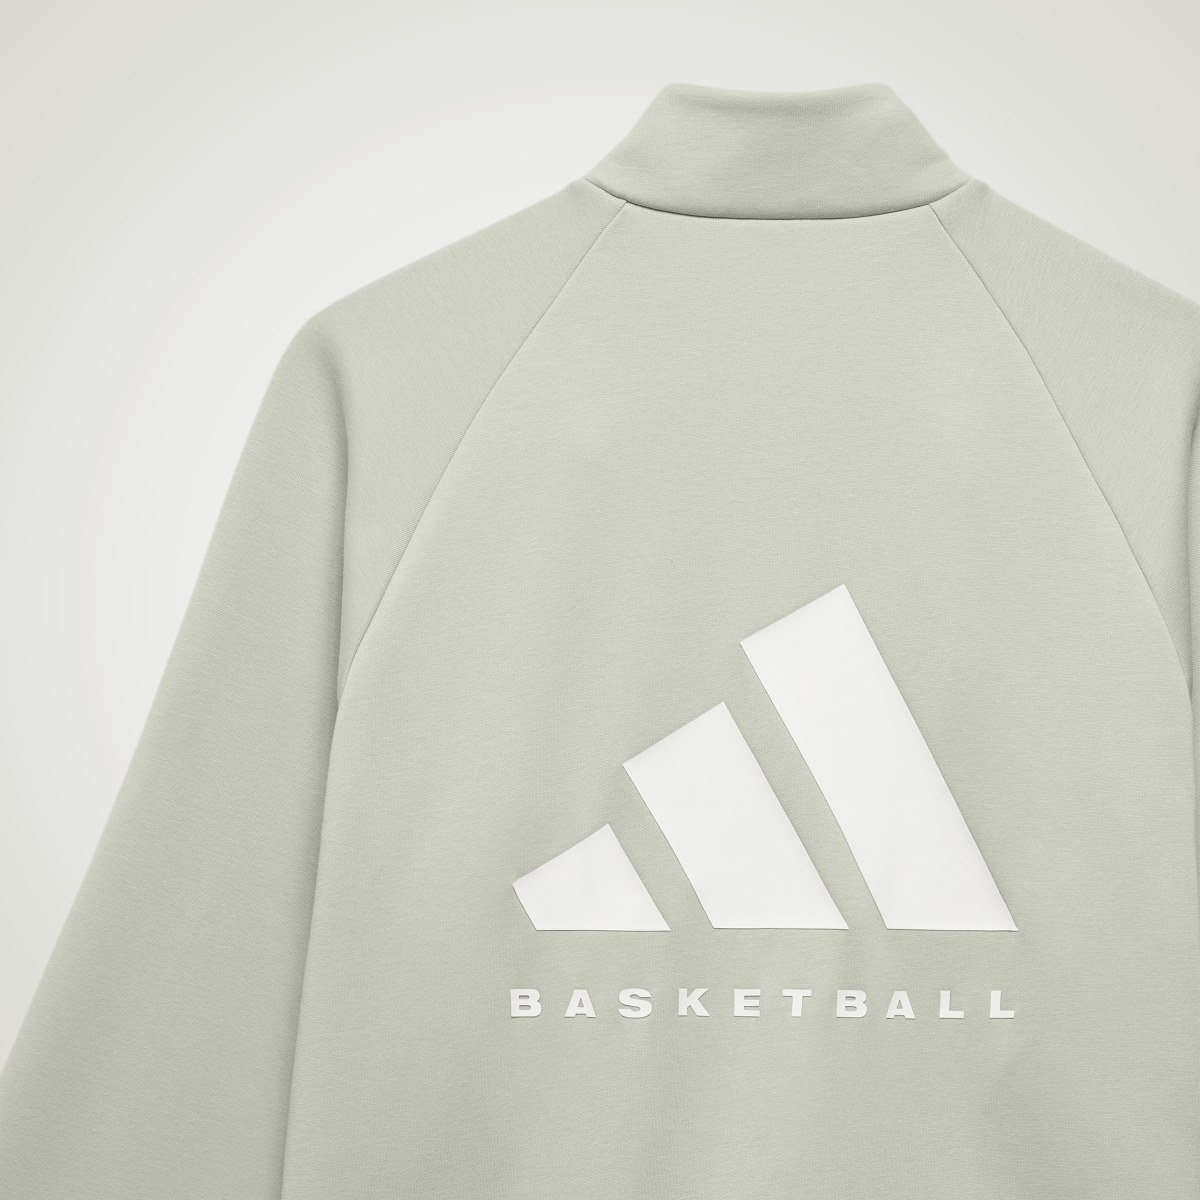 Adidas Basketball Track Jacket. 6